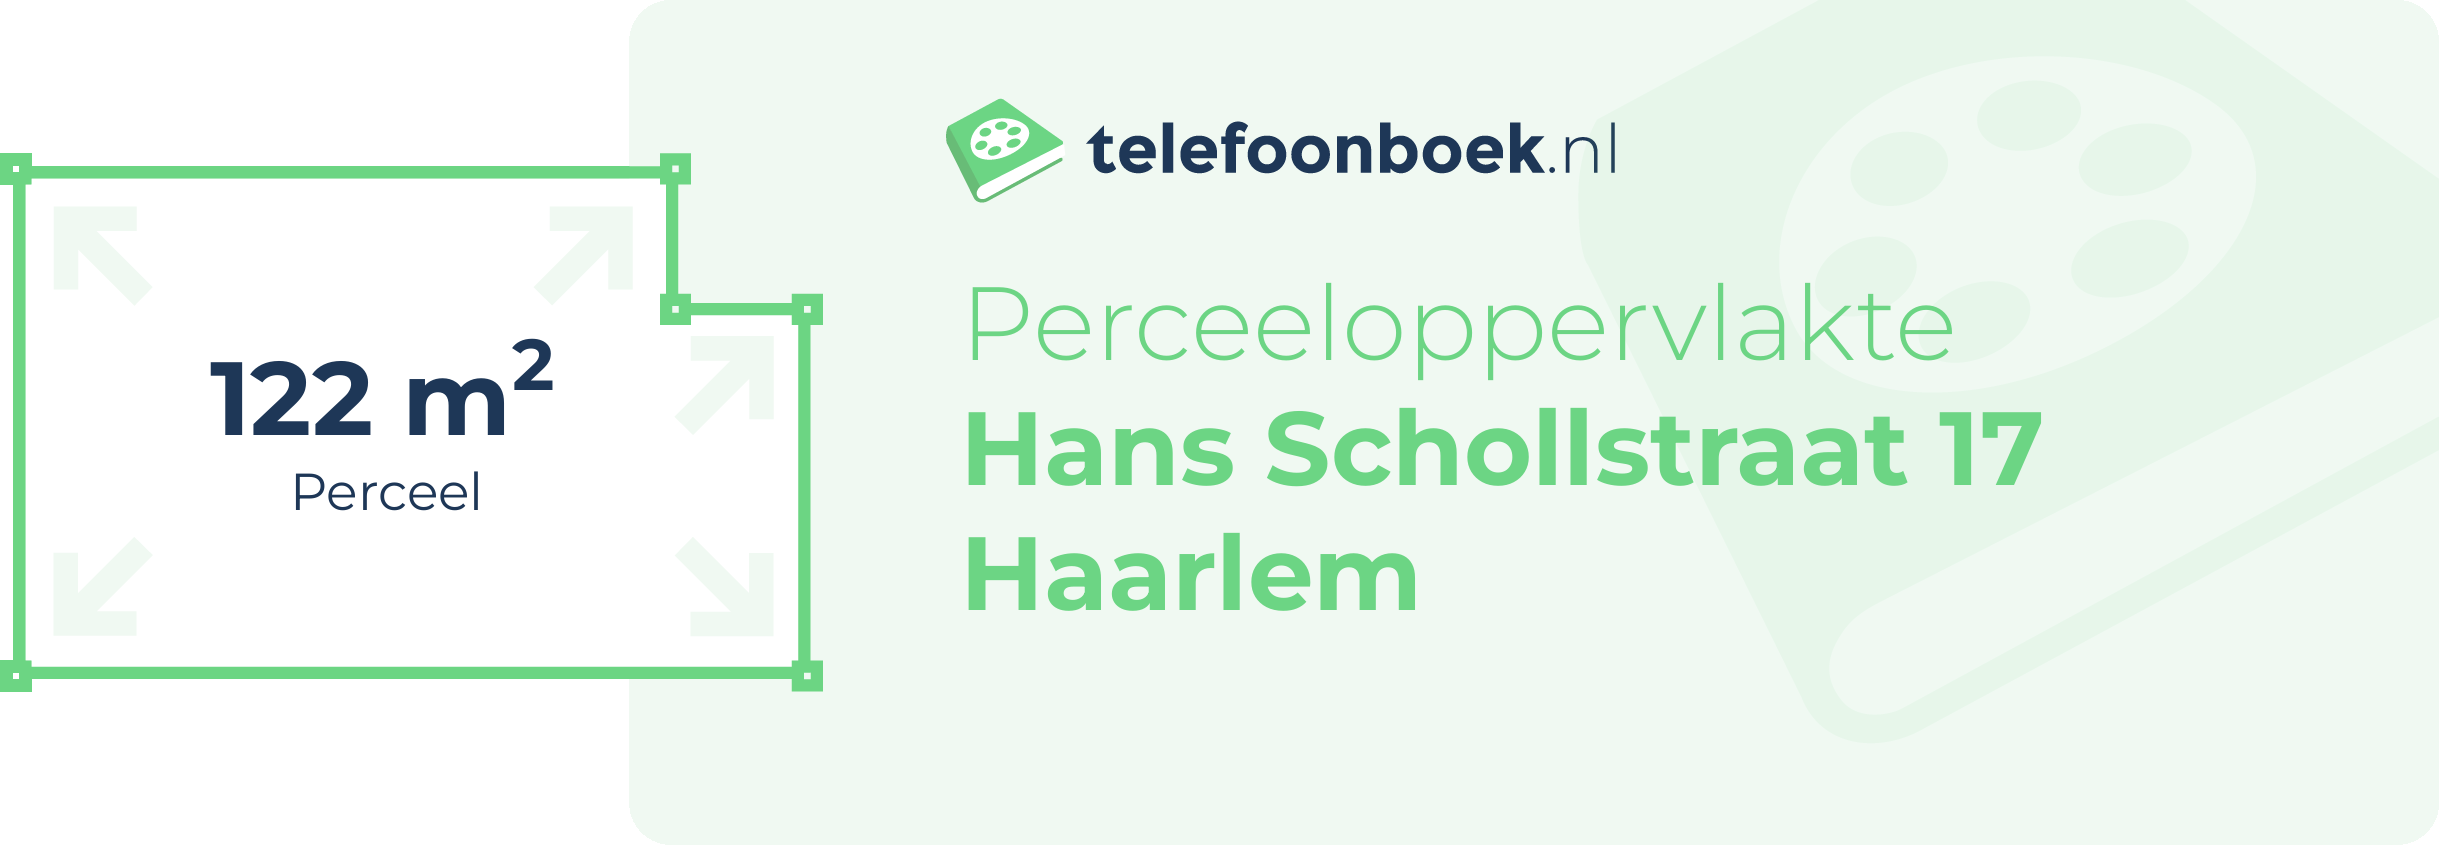 Perceeloppervlakte Hans Schollstraat 17 Haarlem